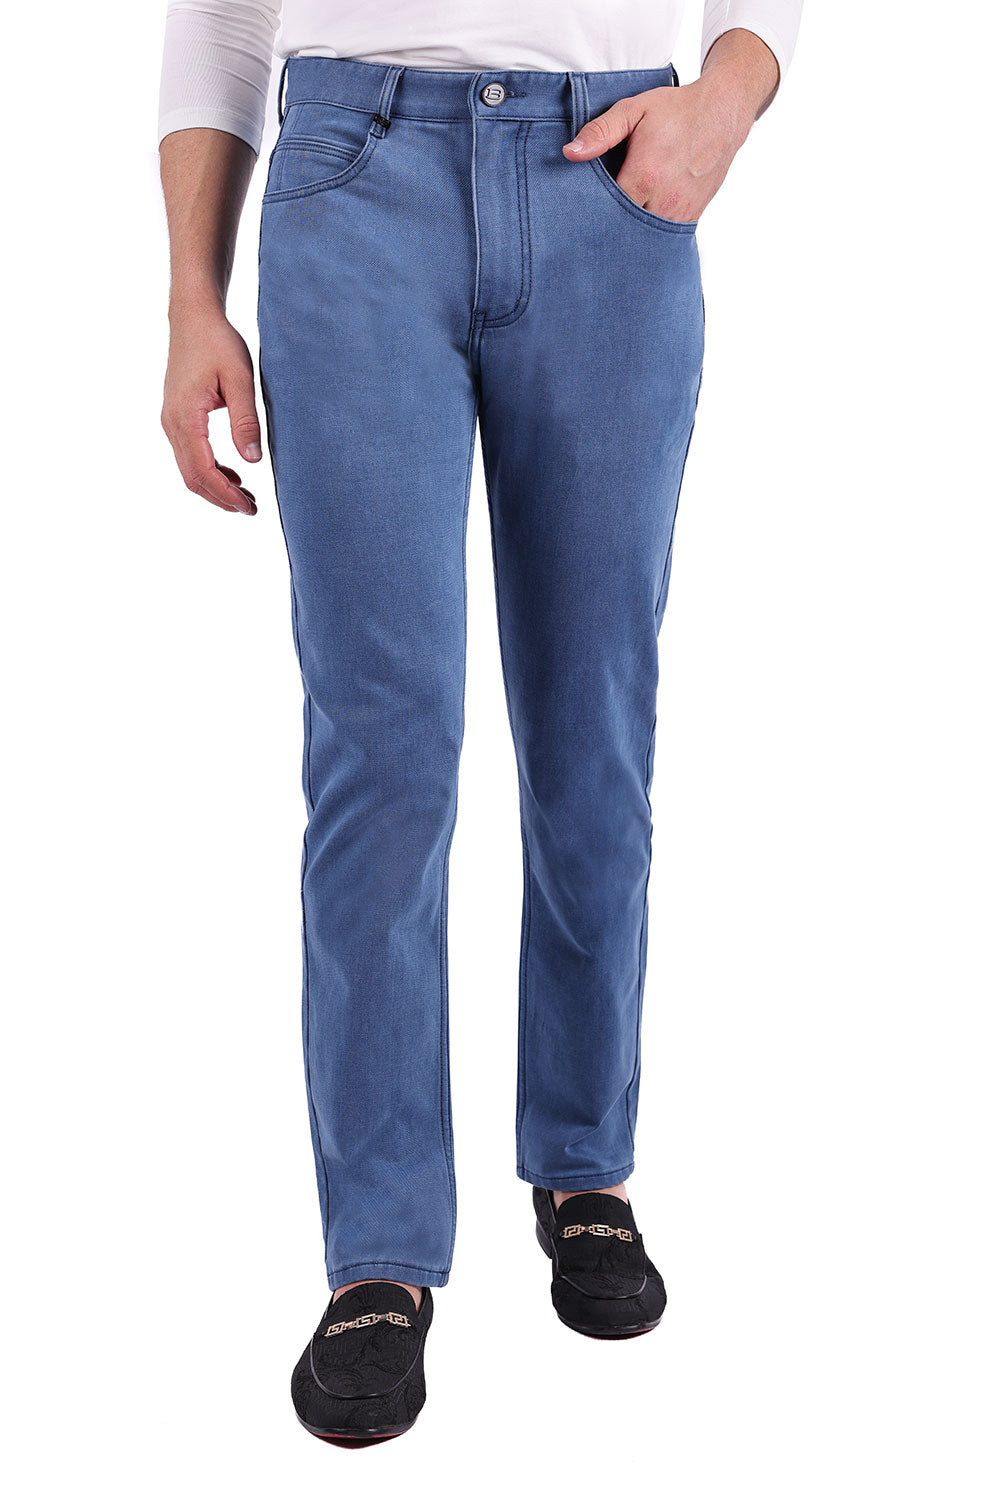 Barabas Men's Solid Color Premium Stretch Denim Jeans 3SN100 Light Blue